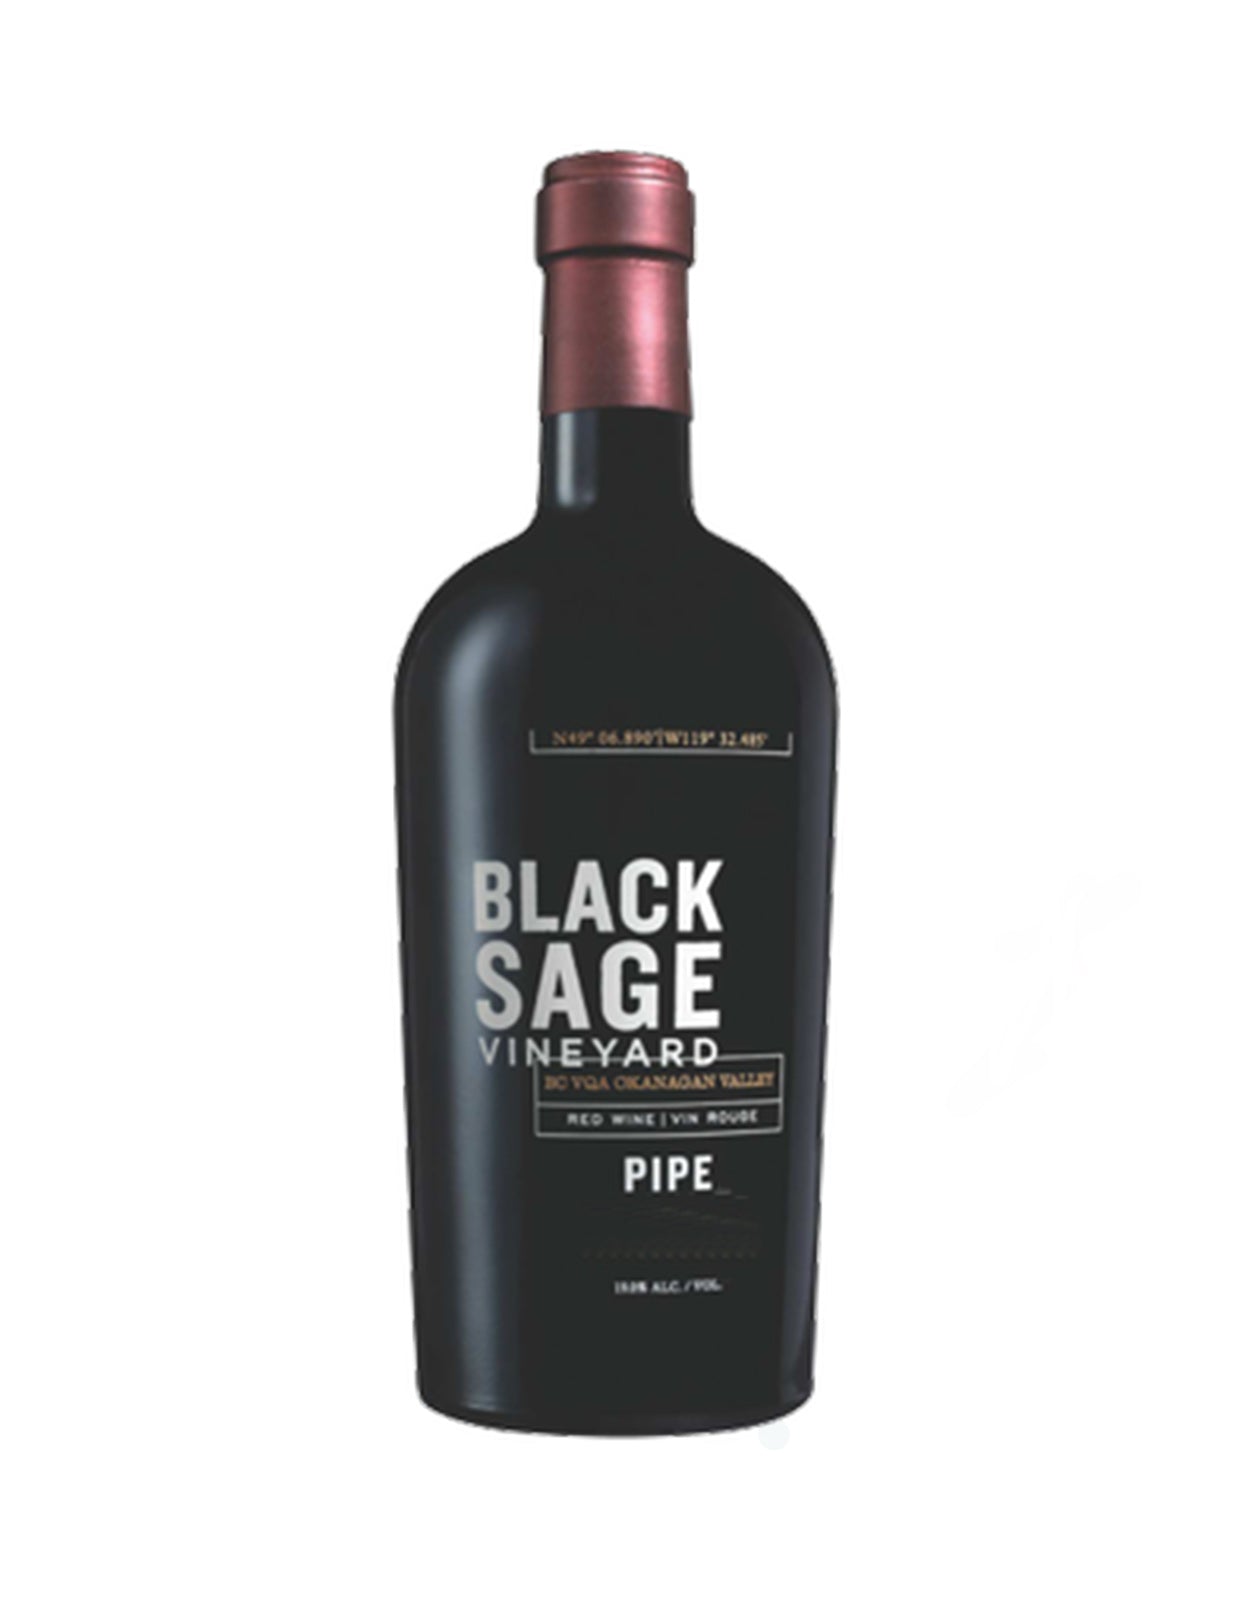 Black Sage Vineyard Pipe 2011 - 500 ml